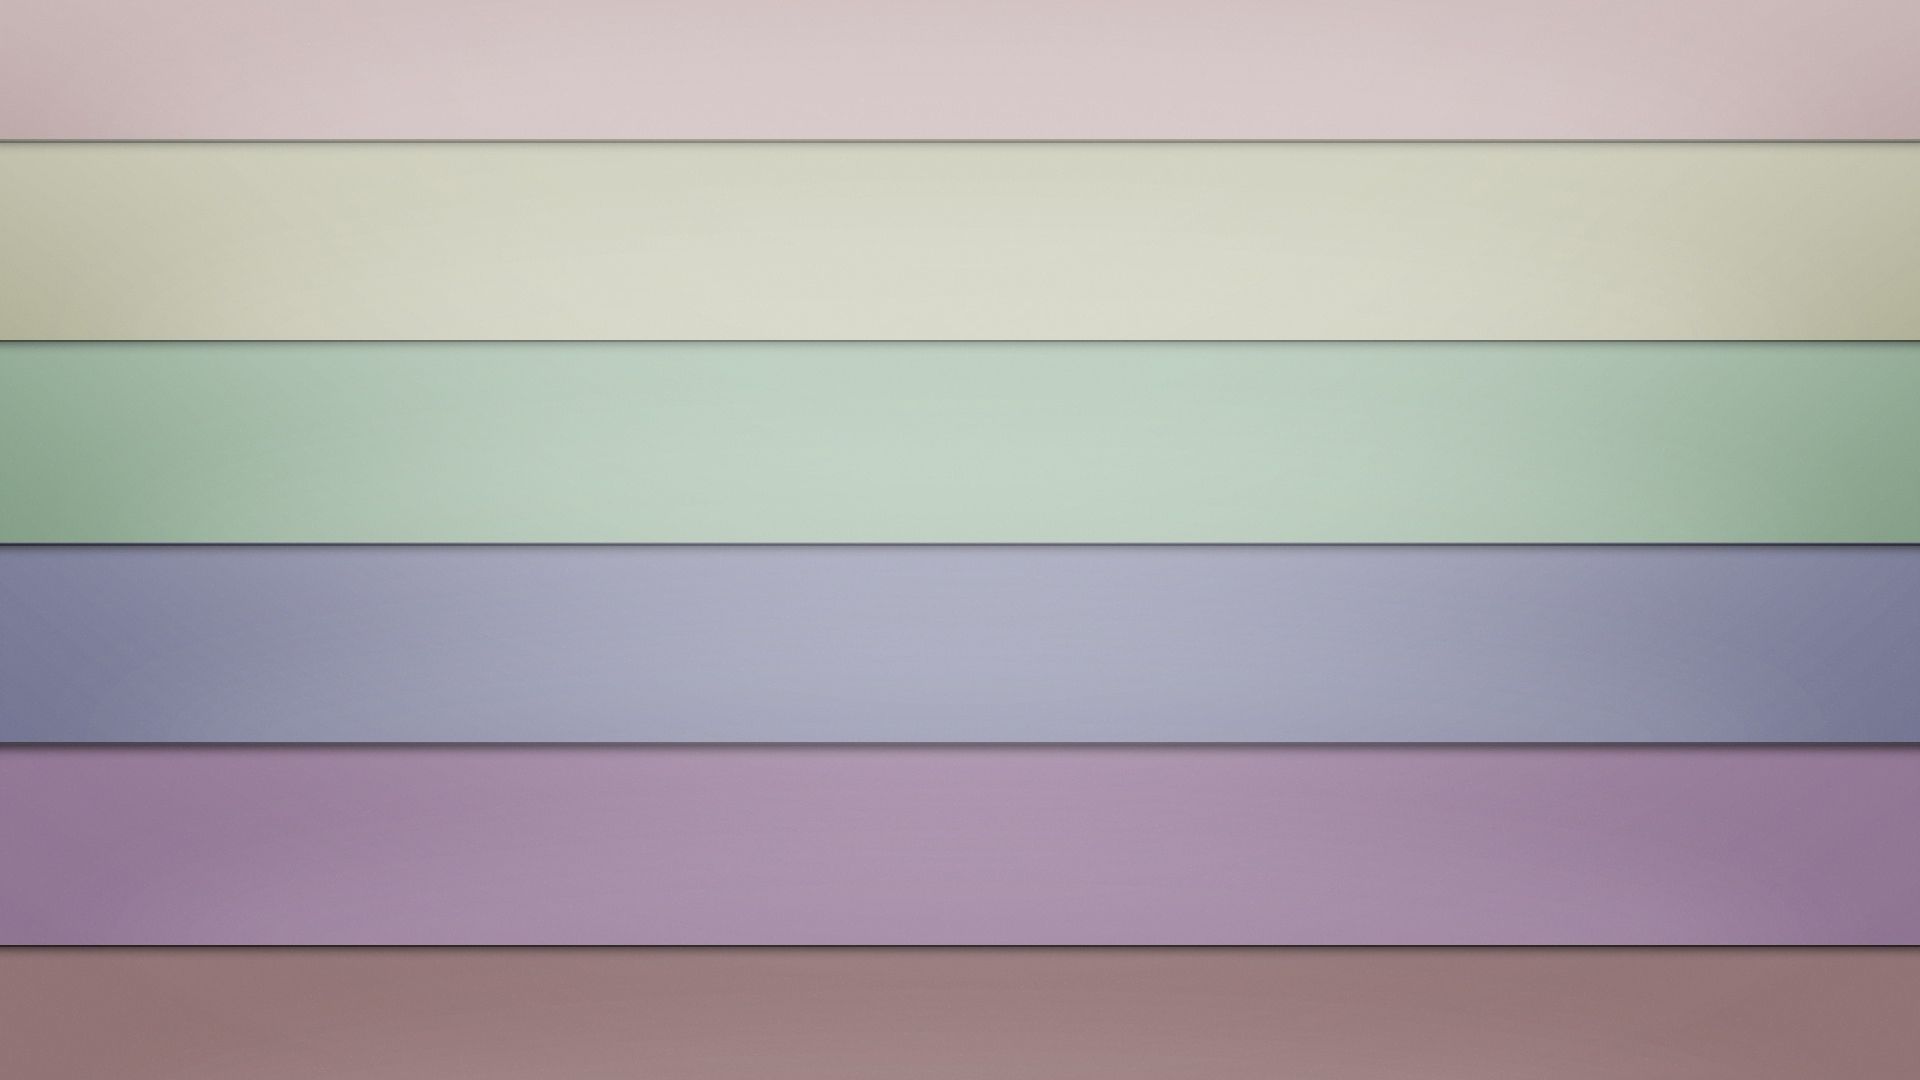 Pastel colors Mac Wallpaper Descargar | Descargar Mac Wallpapers gratis